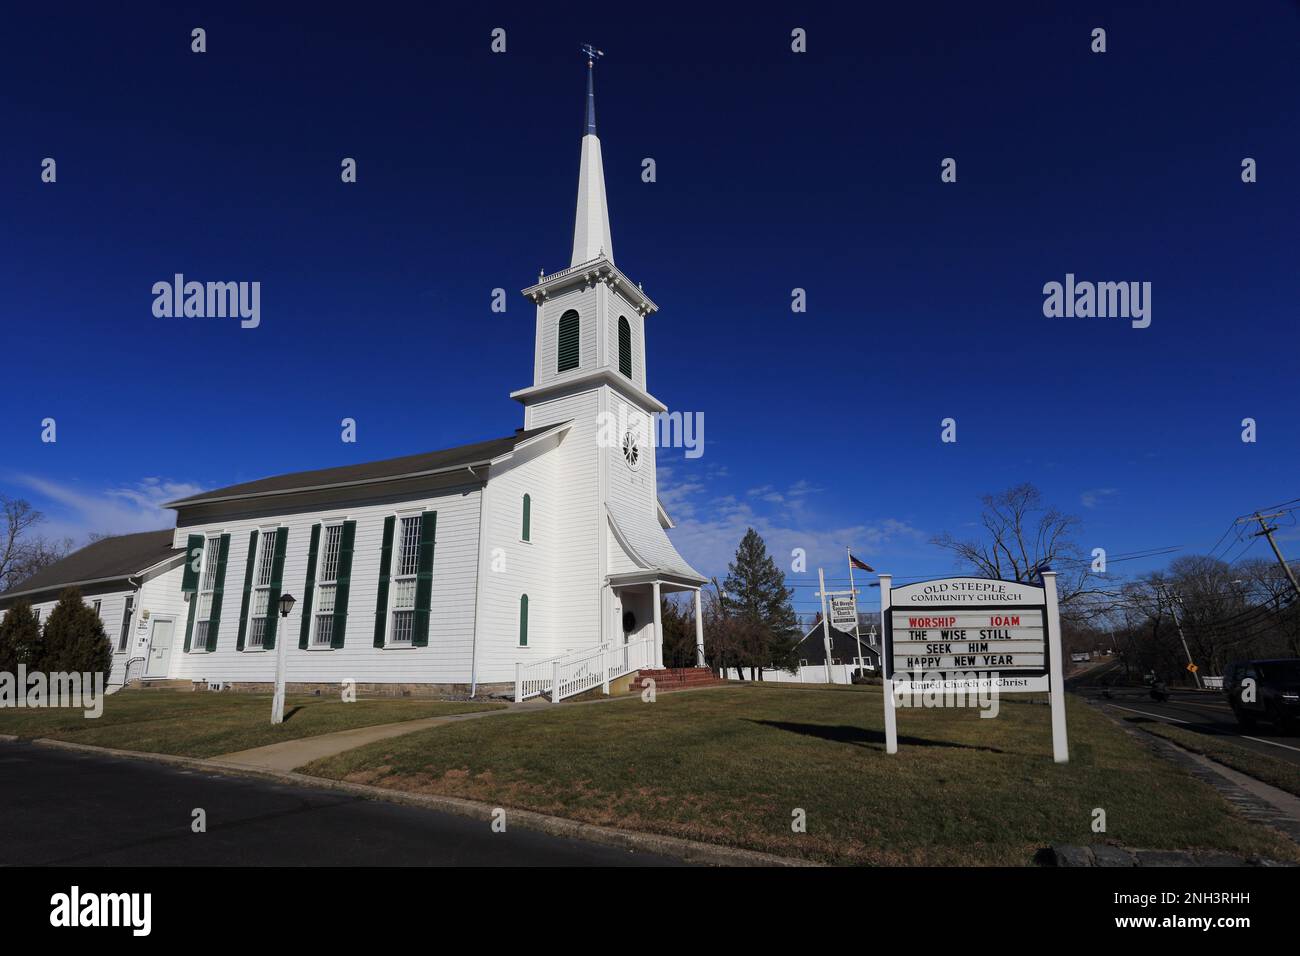 Old Steeple Community Church Aquebogue Long Island New York Stockfoto